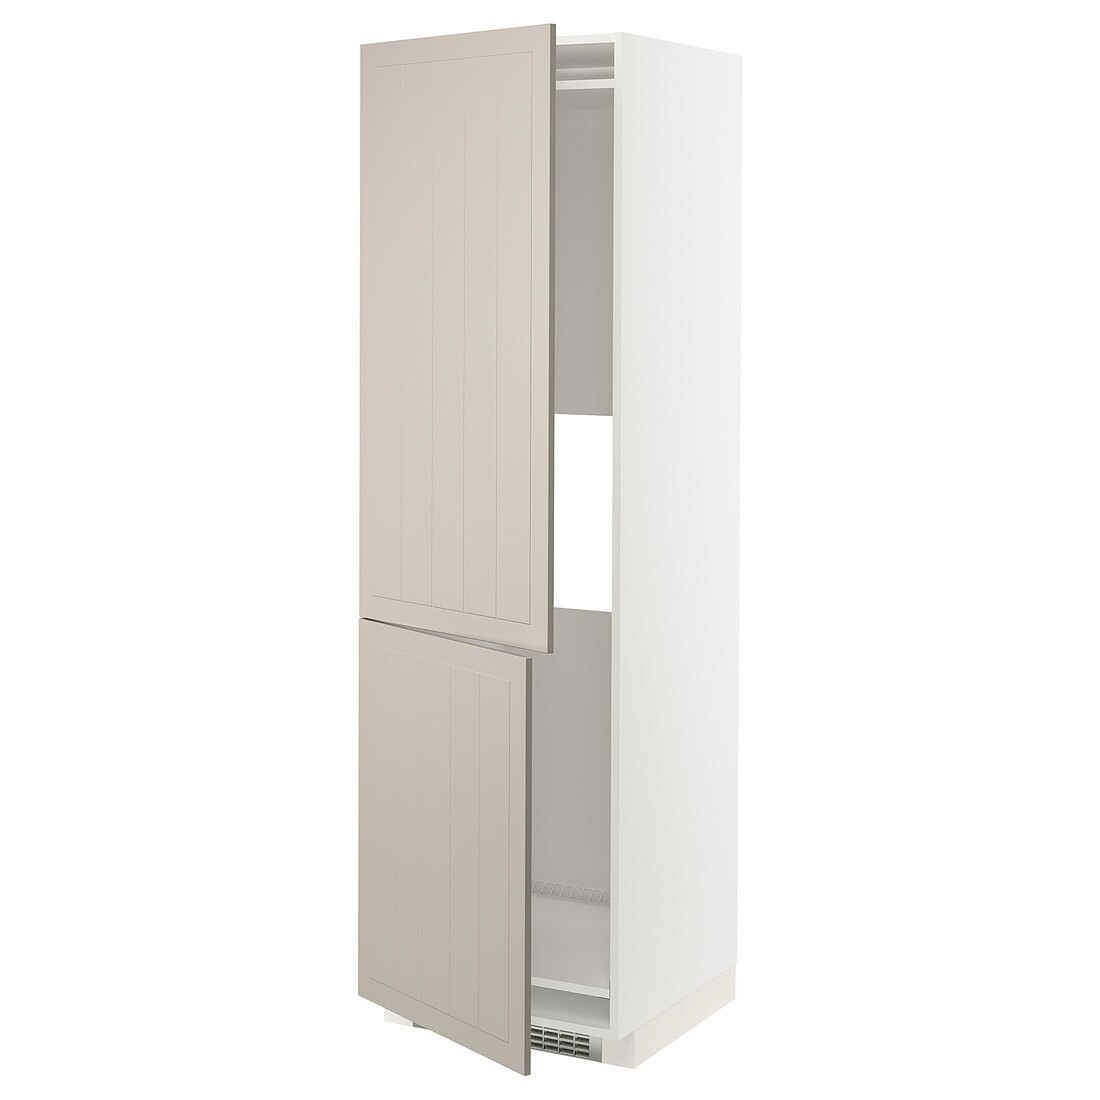 METOD МЕТОД Высокий шкаф для холодильника / морозильника, белый / Stensund бежевый, 60x60x200 см